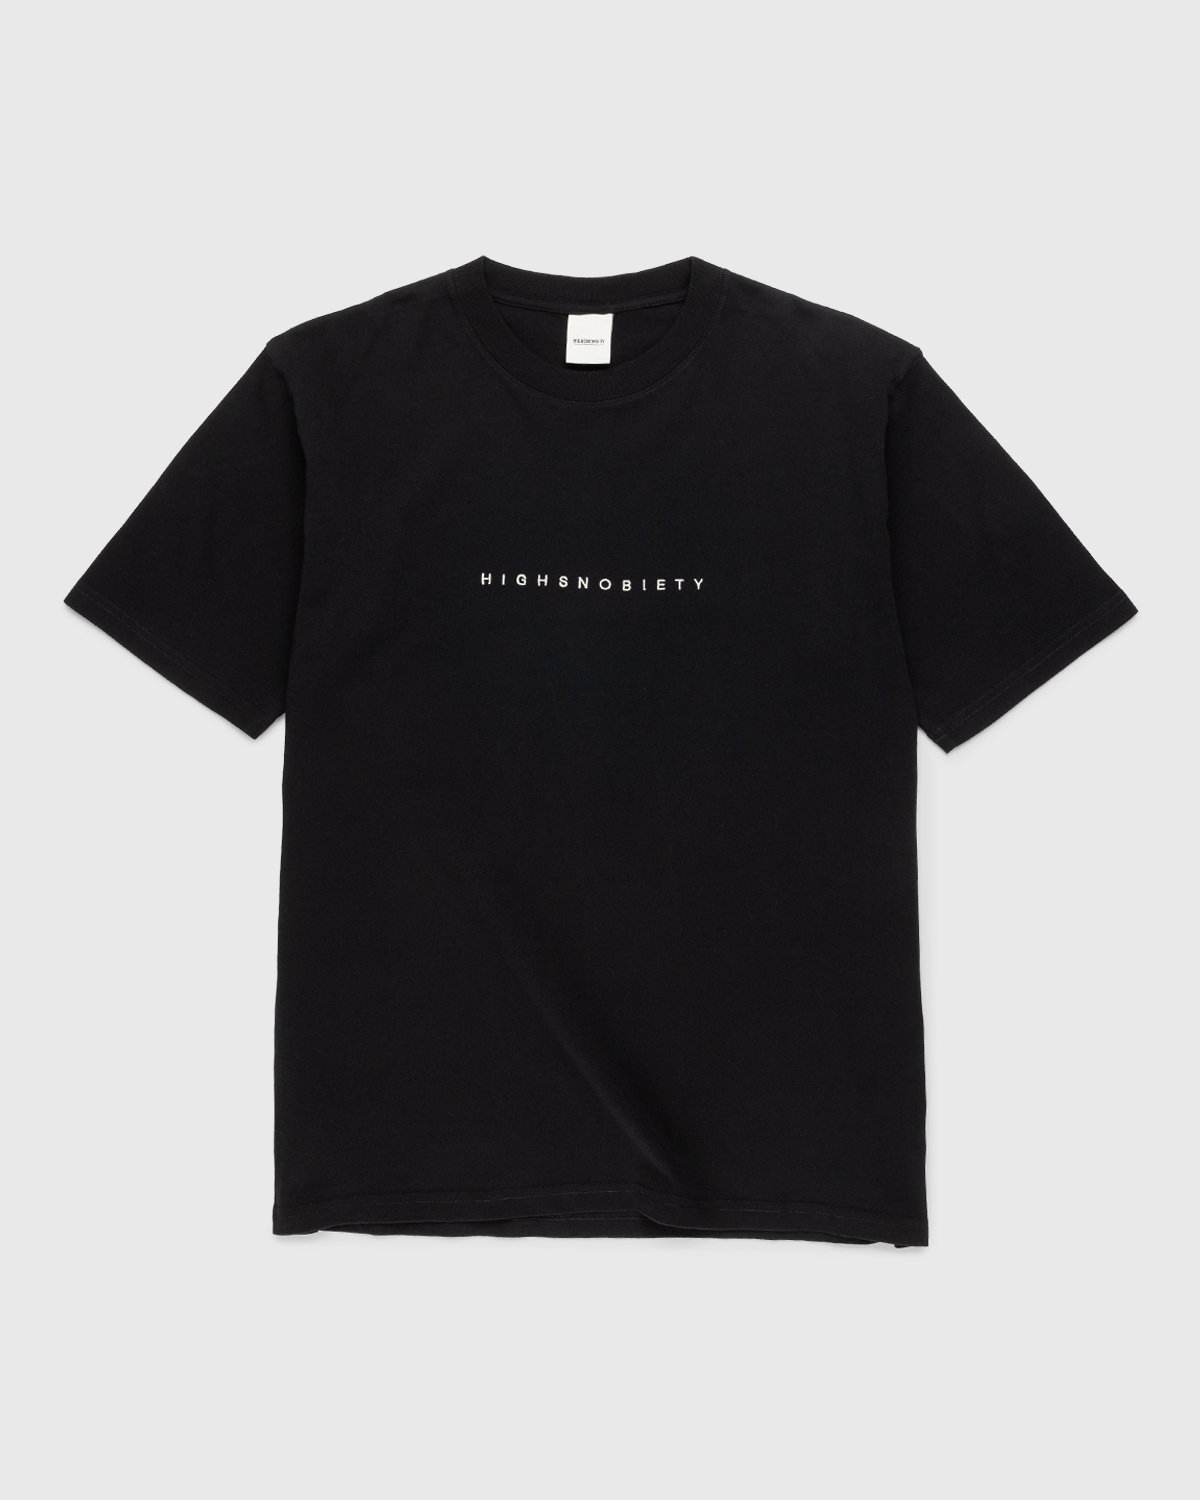 Highsnobiety - Staples T-Shirt Black - Clothing - Black - Image 1